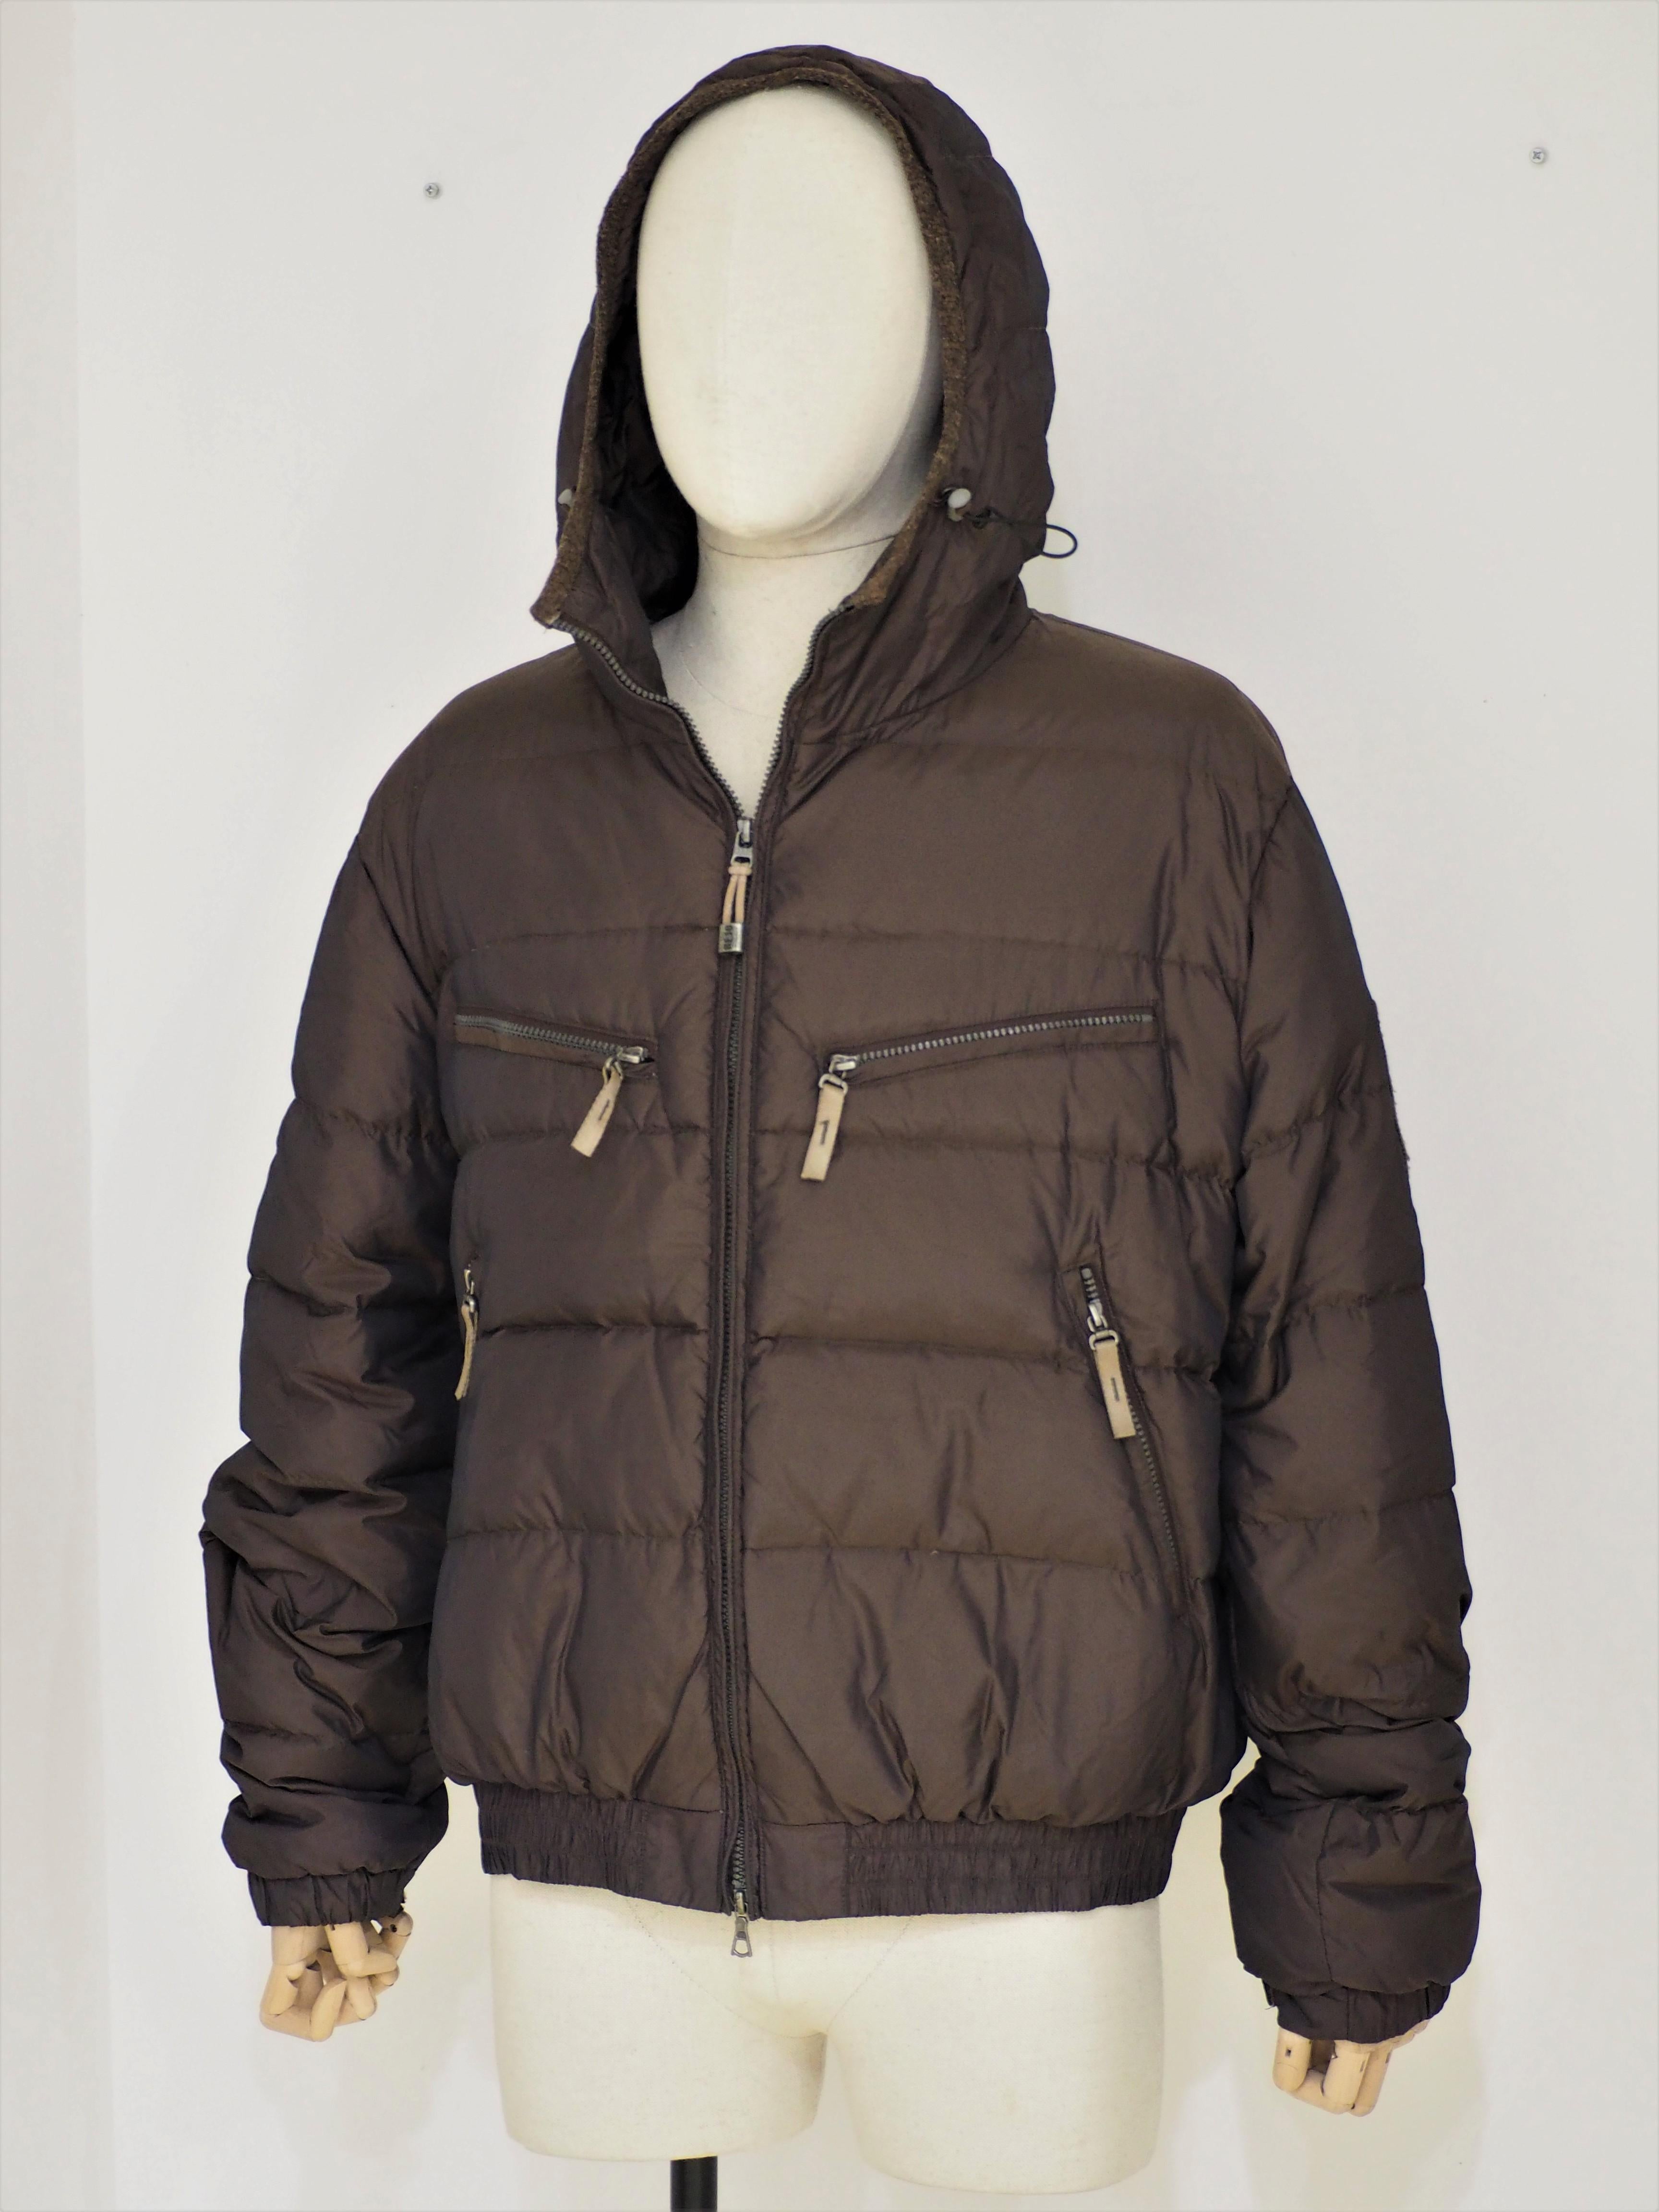 Kejo brown bomber jacket
size XXL